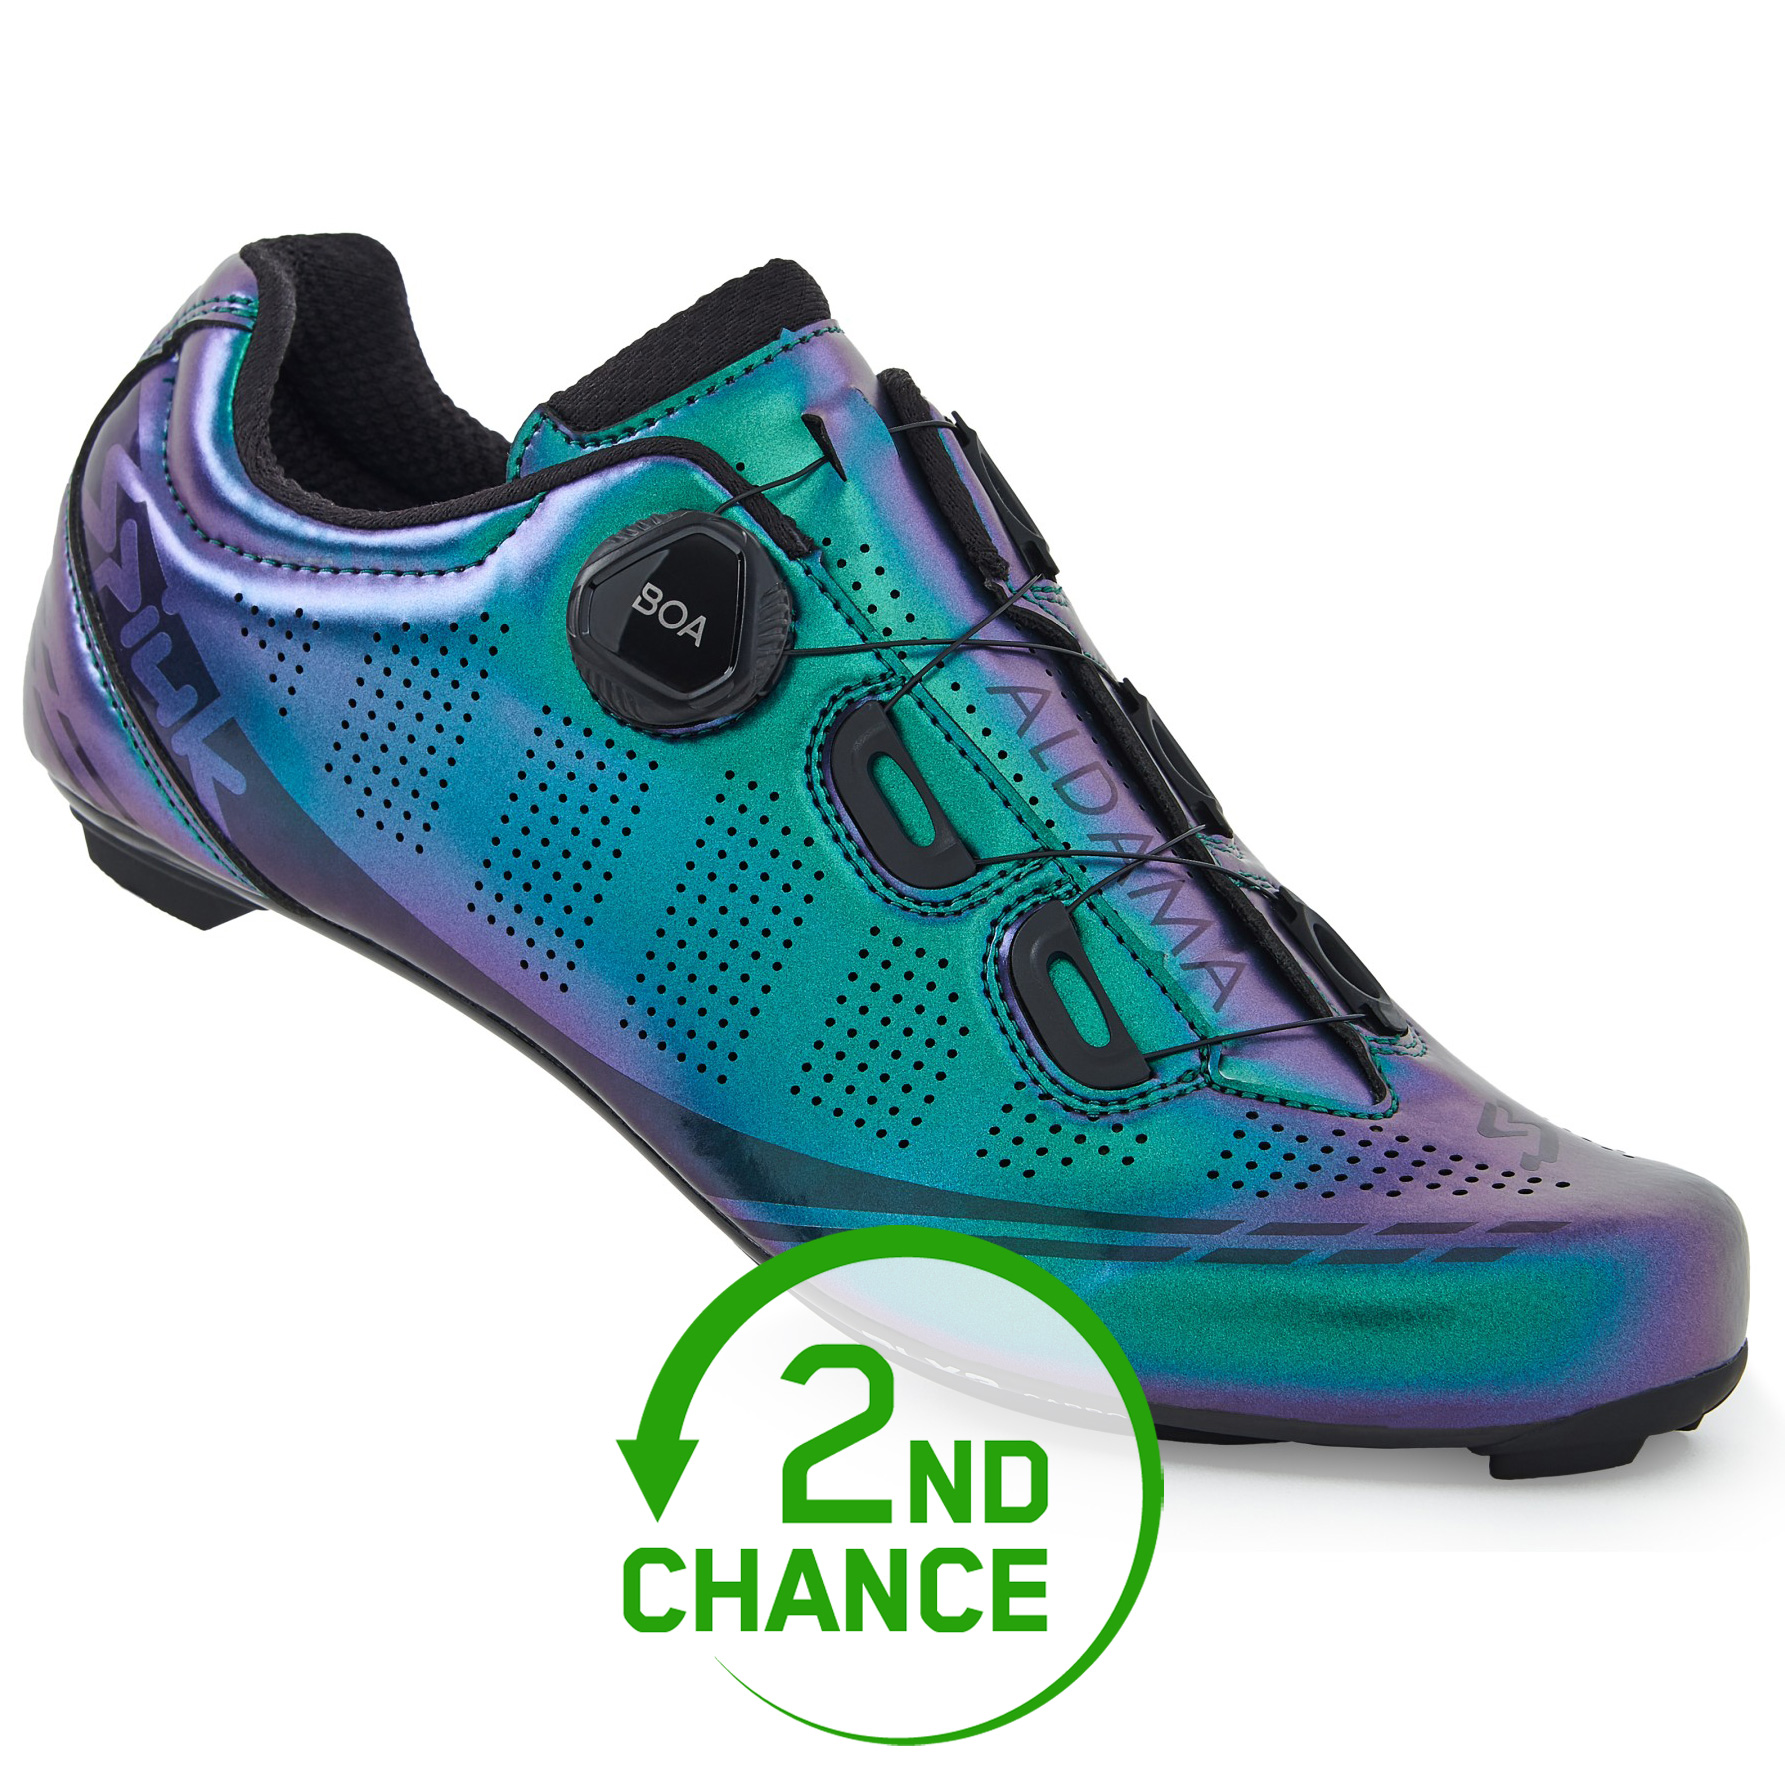 Picture of Spiuk Aldama Carbon Road Shoes Men - iridiscent - 2nd Choice